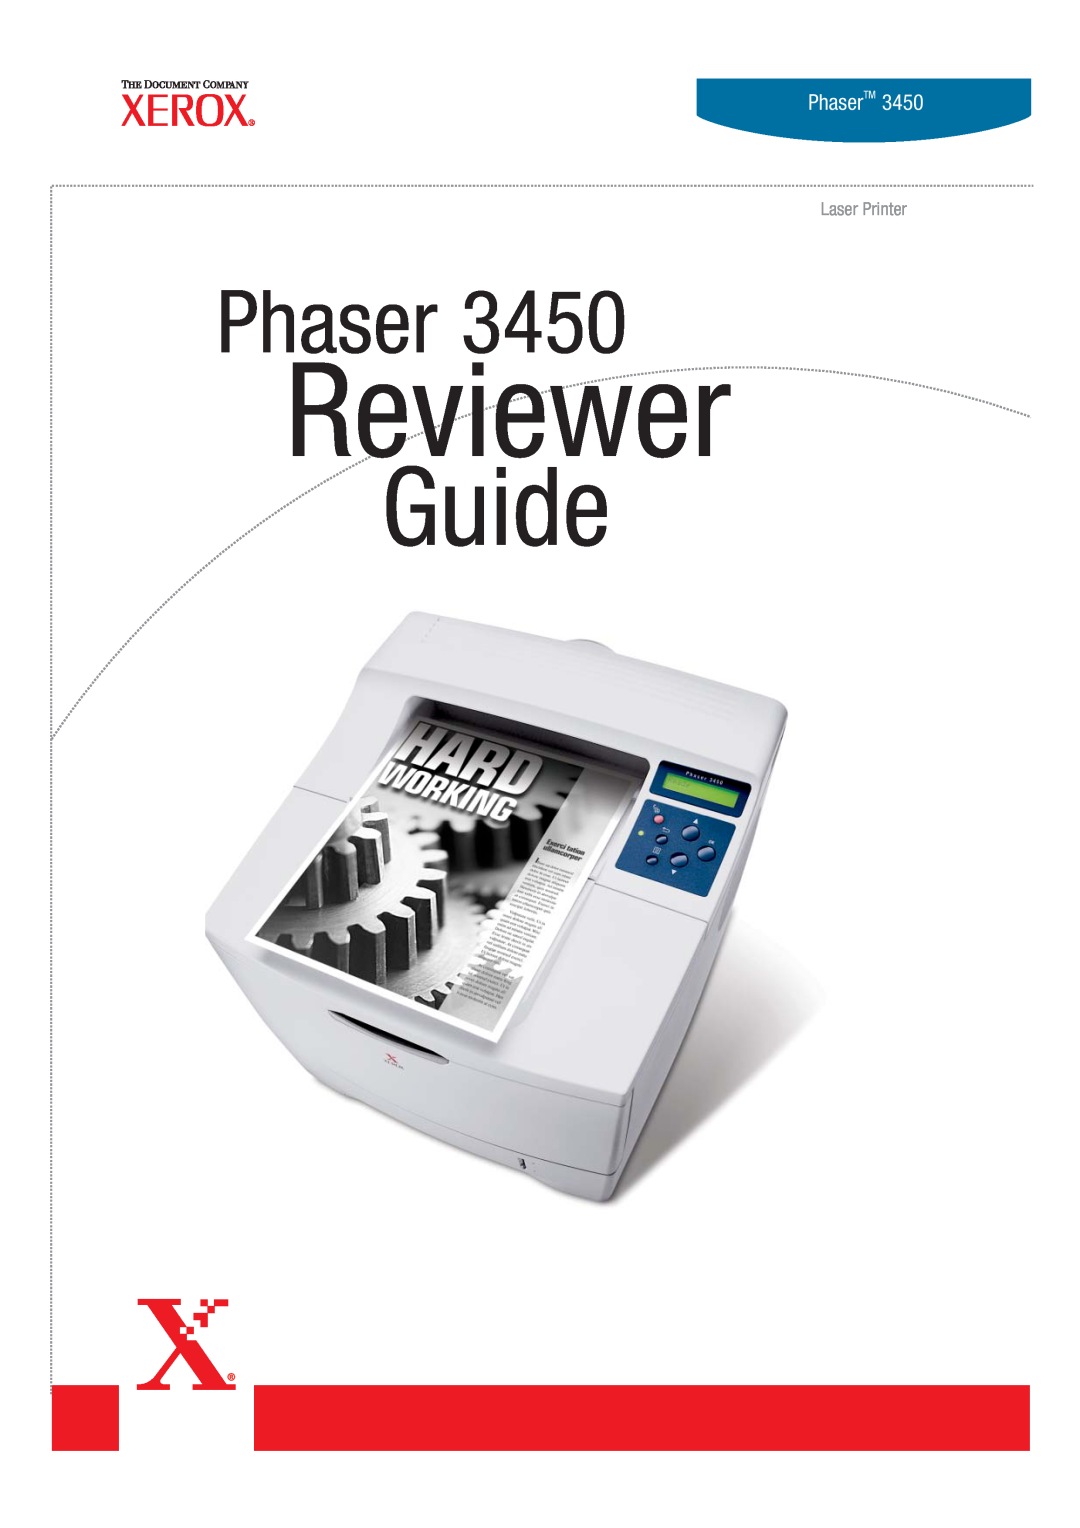 Xerox 3450 manual PhaserTM, Reviewer, Guide, Laser Printer 